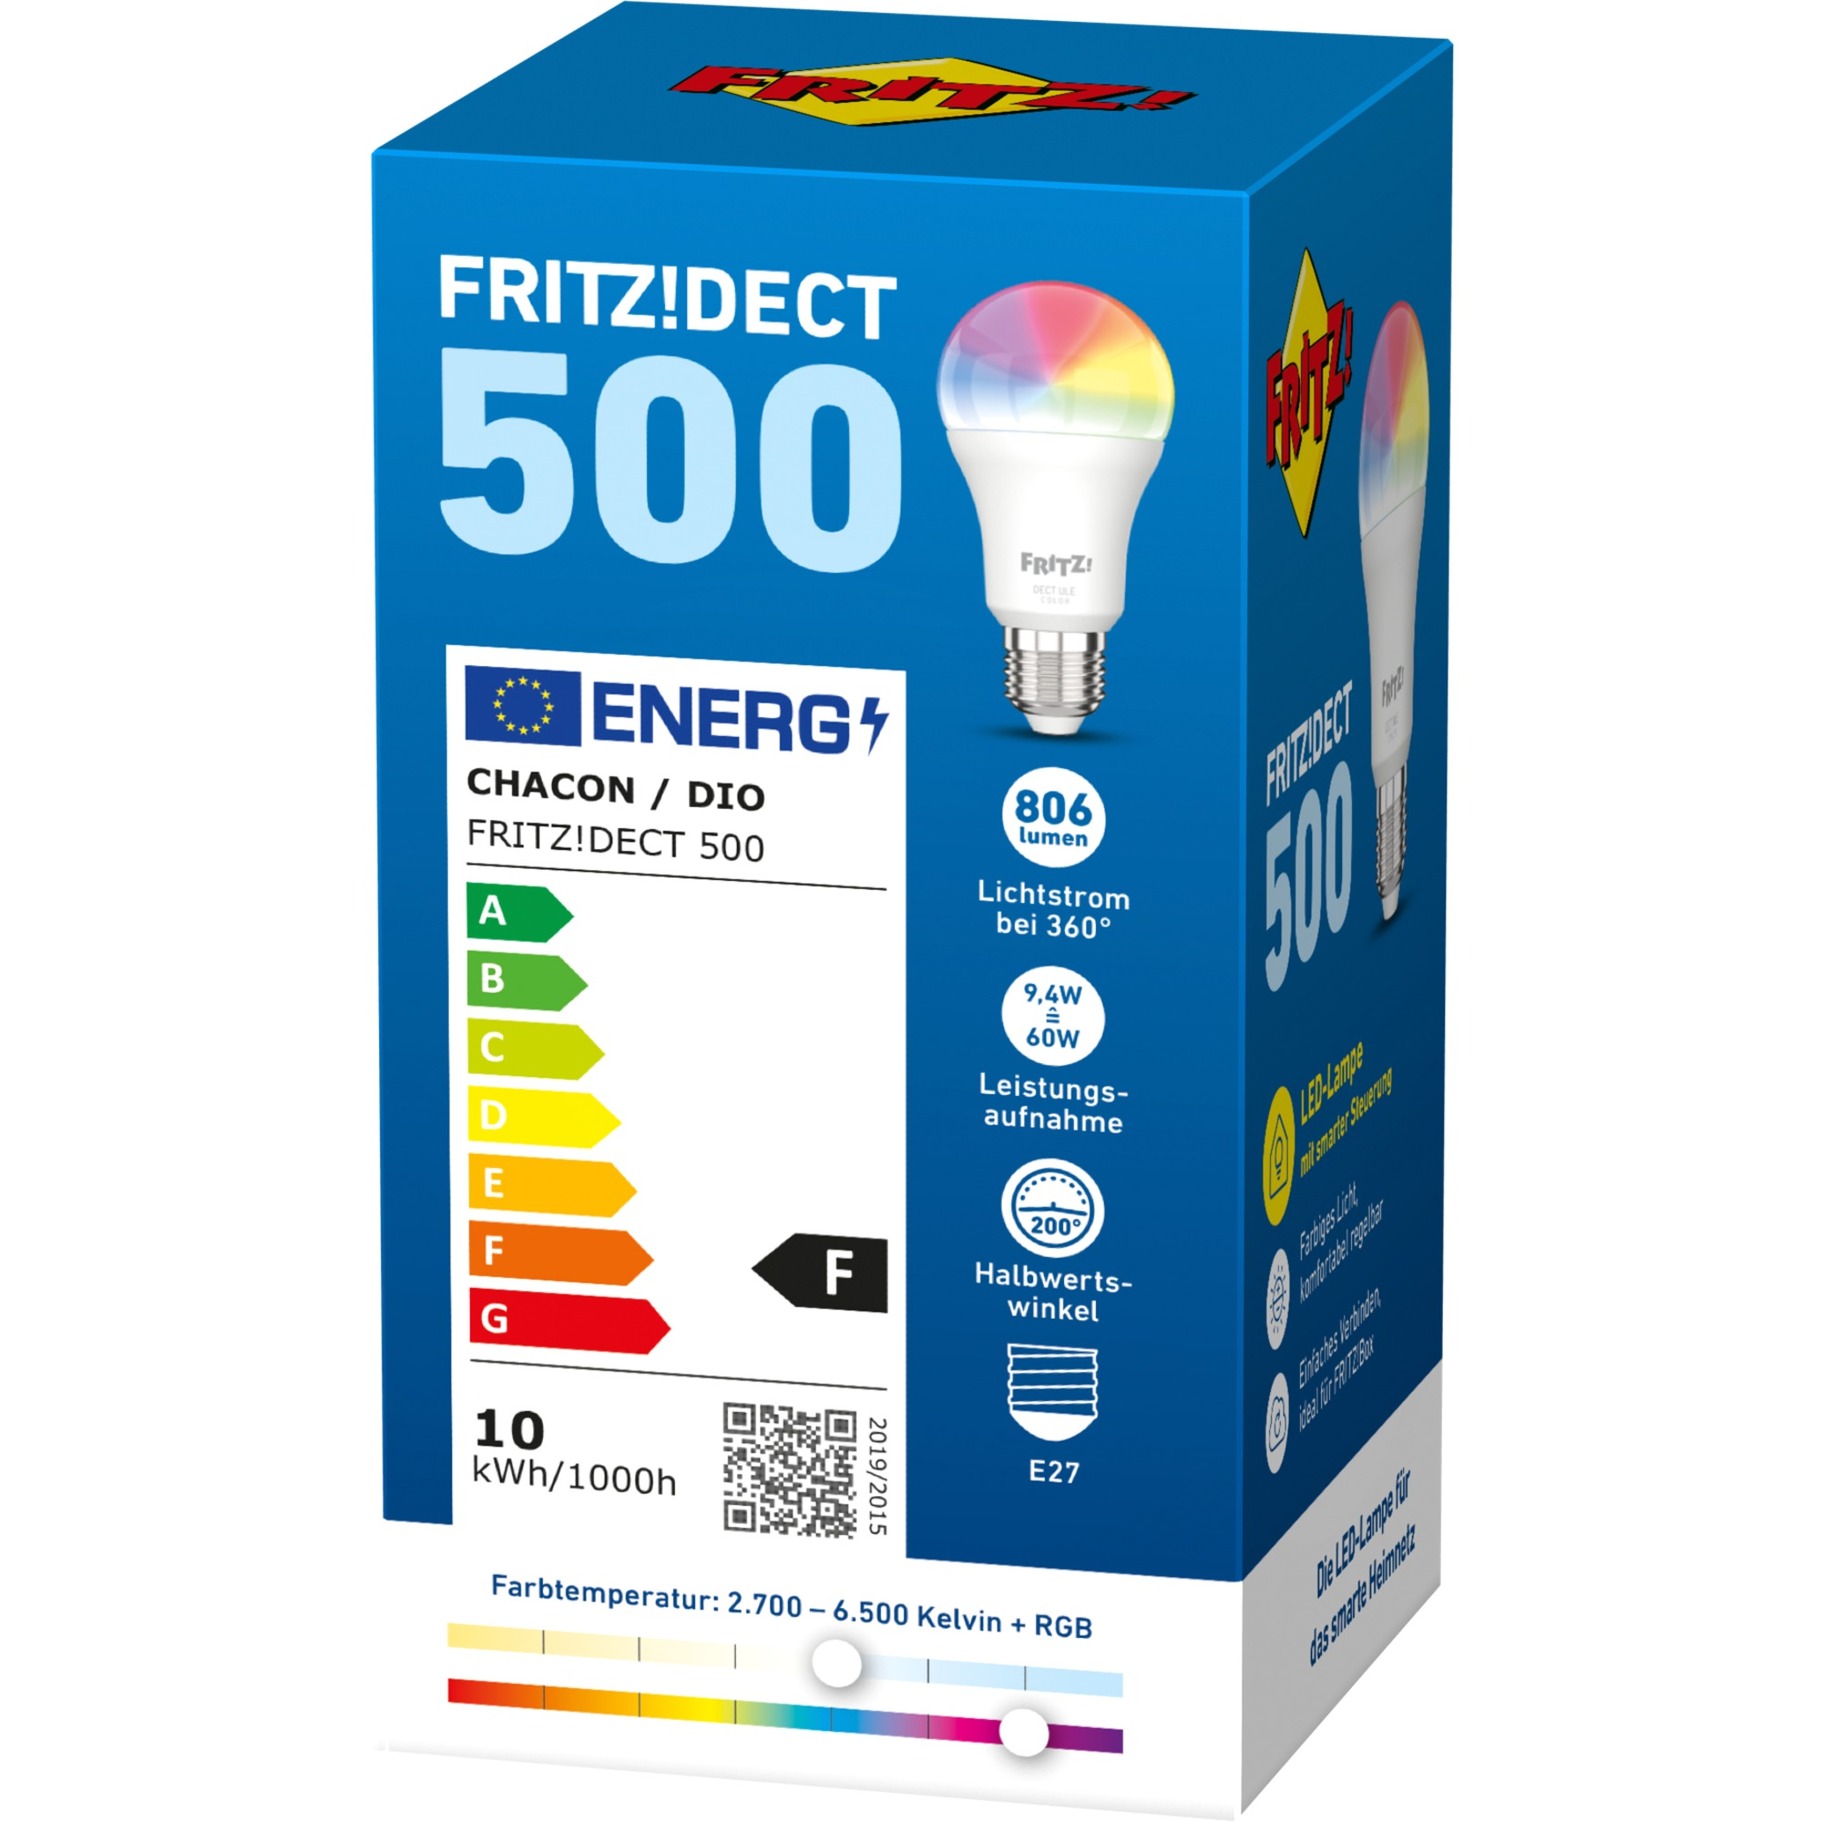 Image of Alternate - FRITZ!DECT 500, LED-Lampe online einkaufen bei Alternate